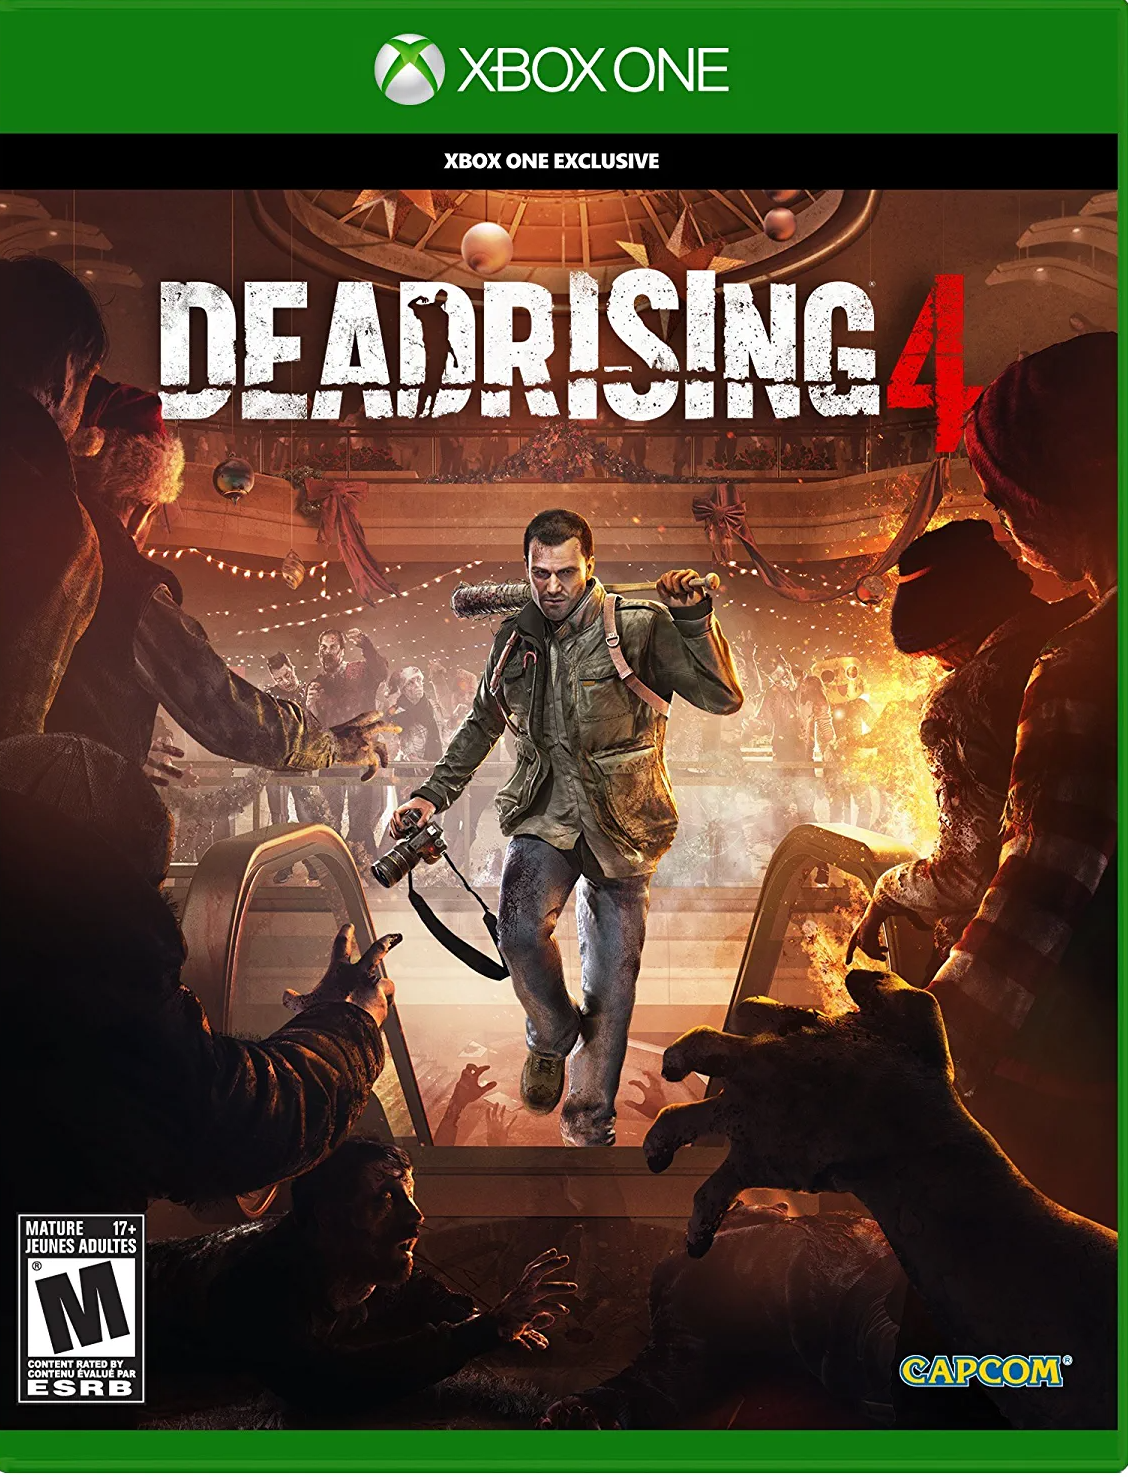 Dead Rising 3 – Hardcore Gaming 101